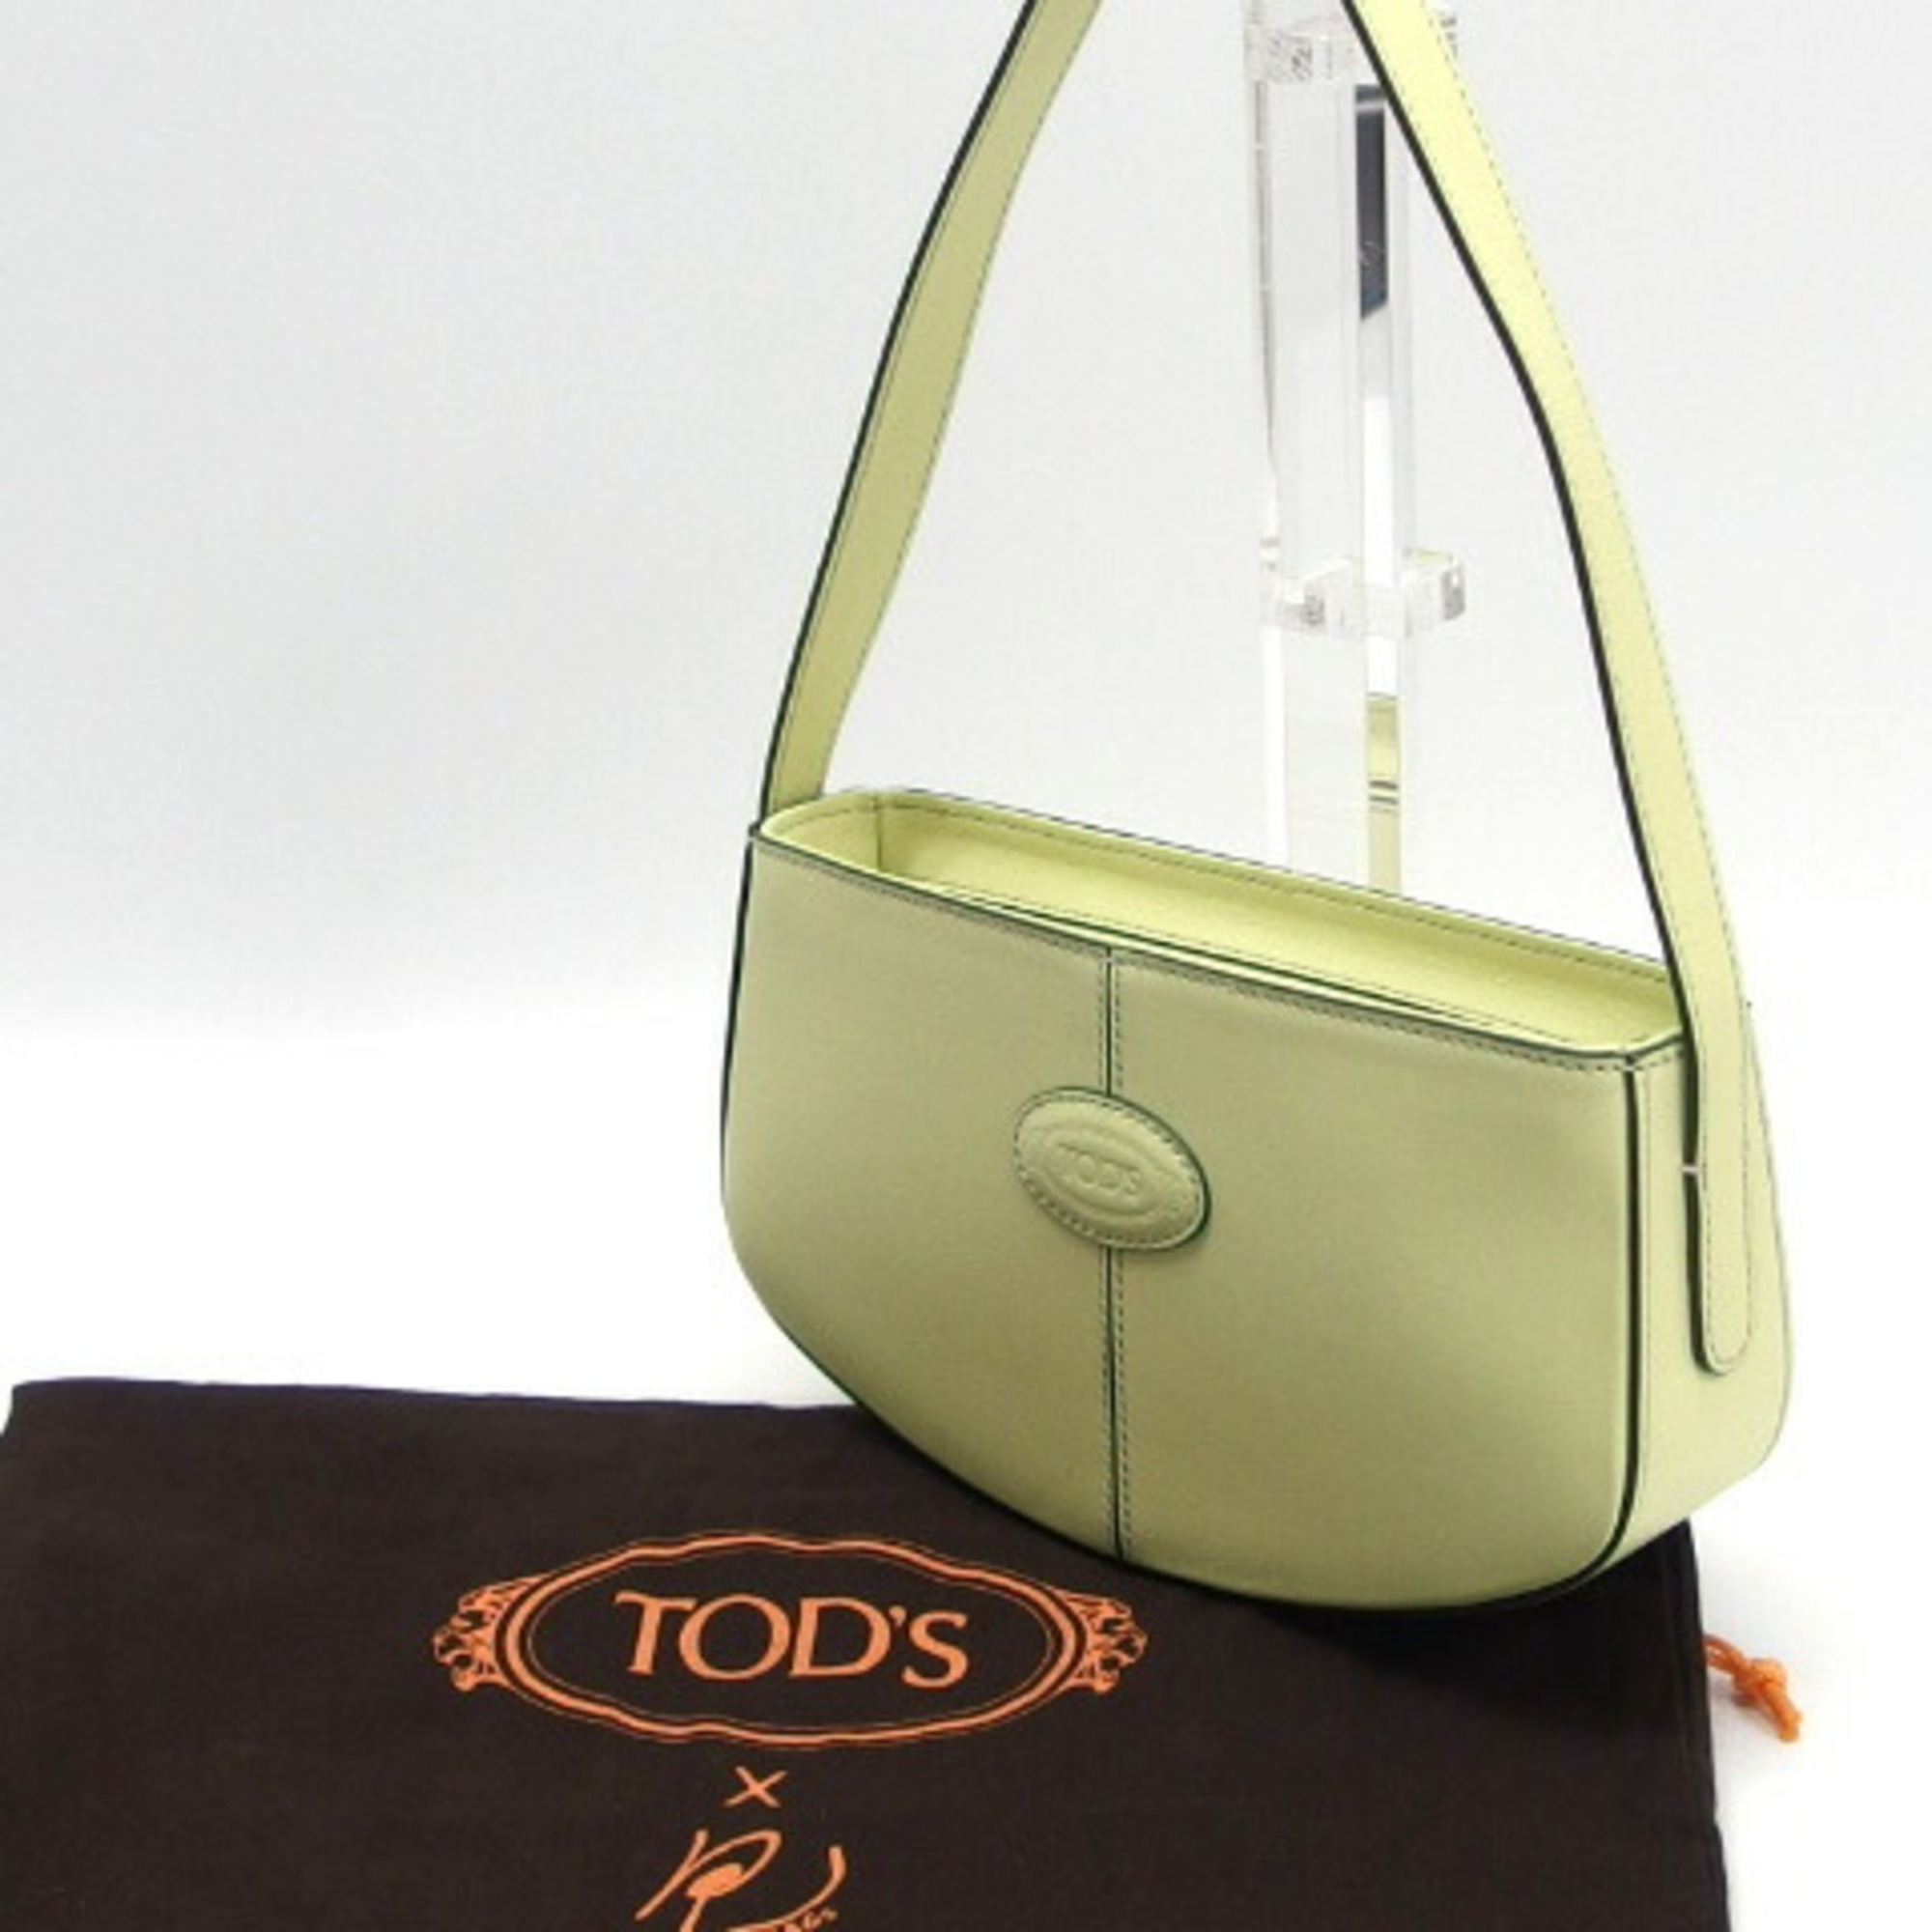 Tod's & Mr. Bag Collaboration Handbag 2020 Limited Edition